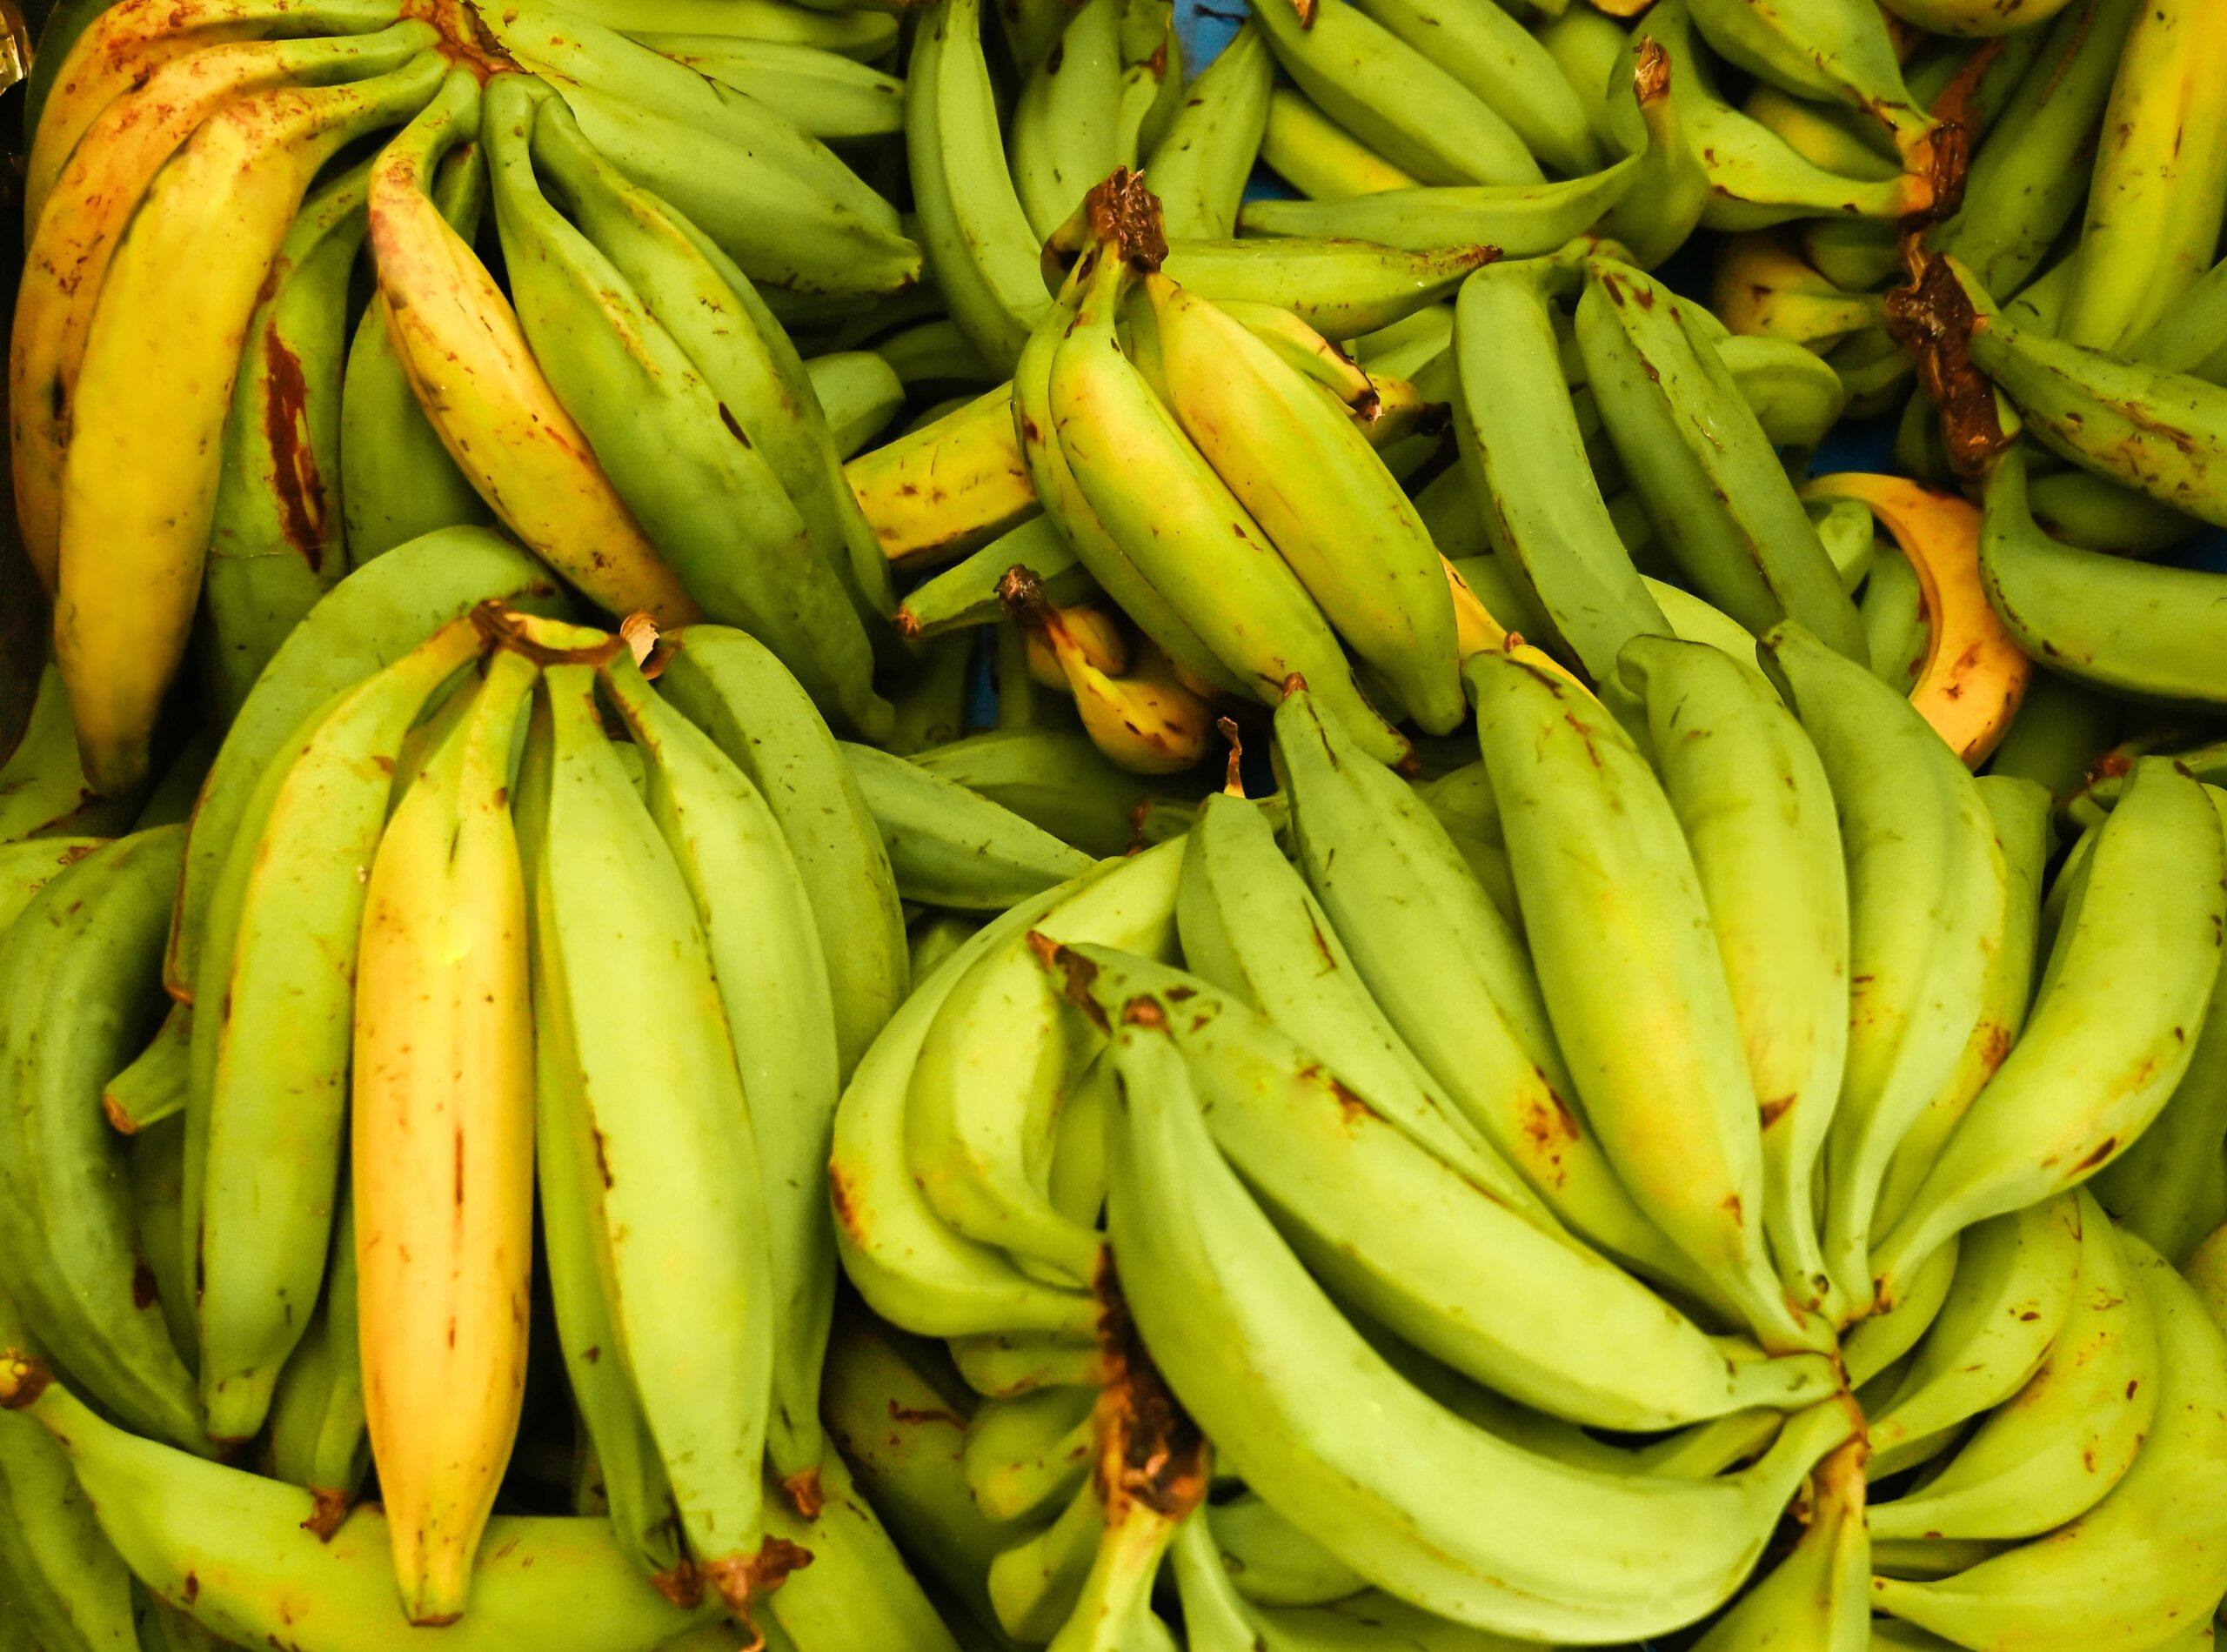 Banane-jaune-de-Martinique-vente-en-ligne